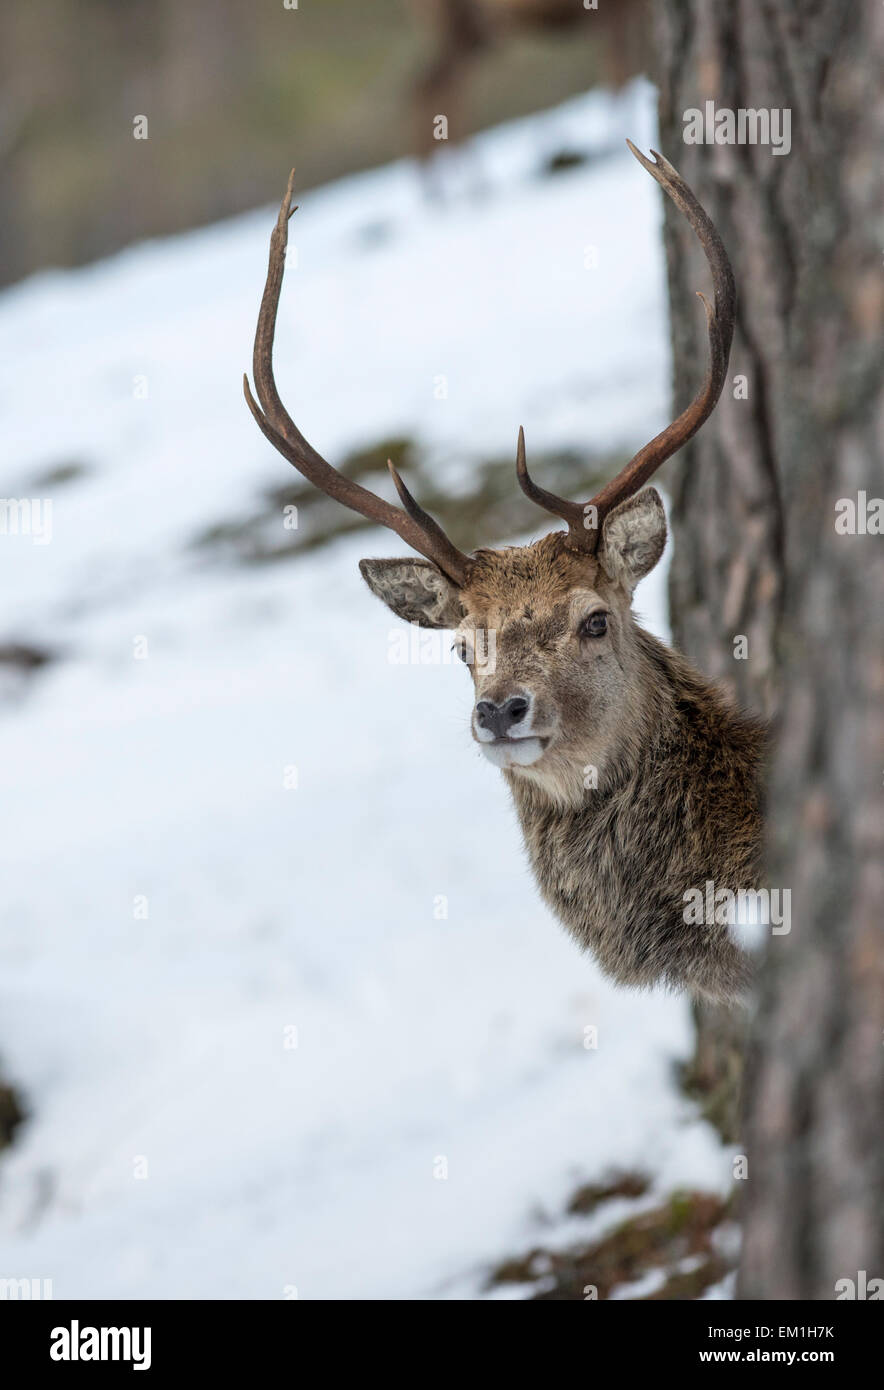 Red deer (Cervus elaphus). Stag peering from behind a tree, on the Alvie estate in Scotland in winter. Stock Photo